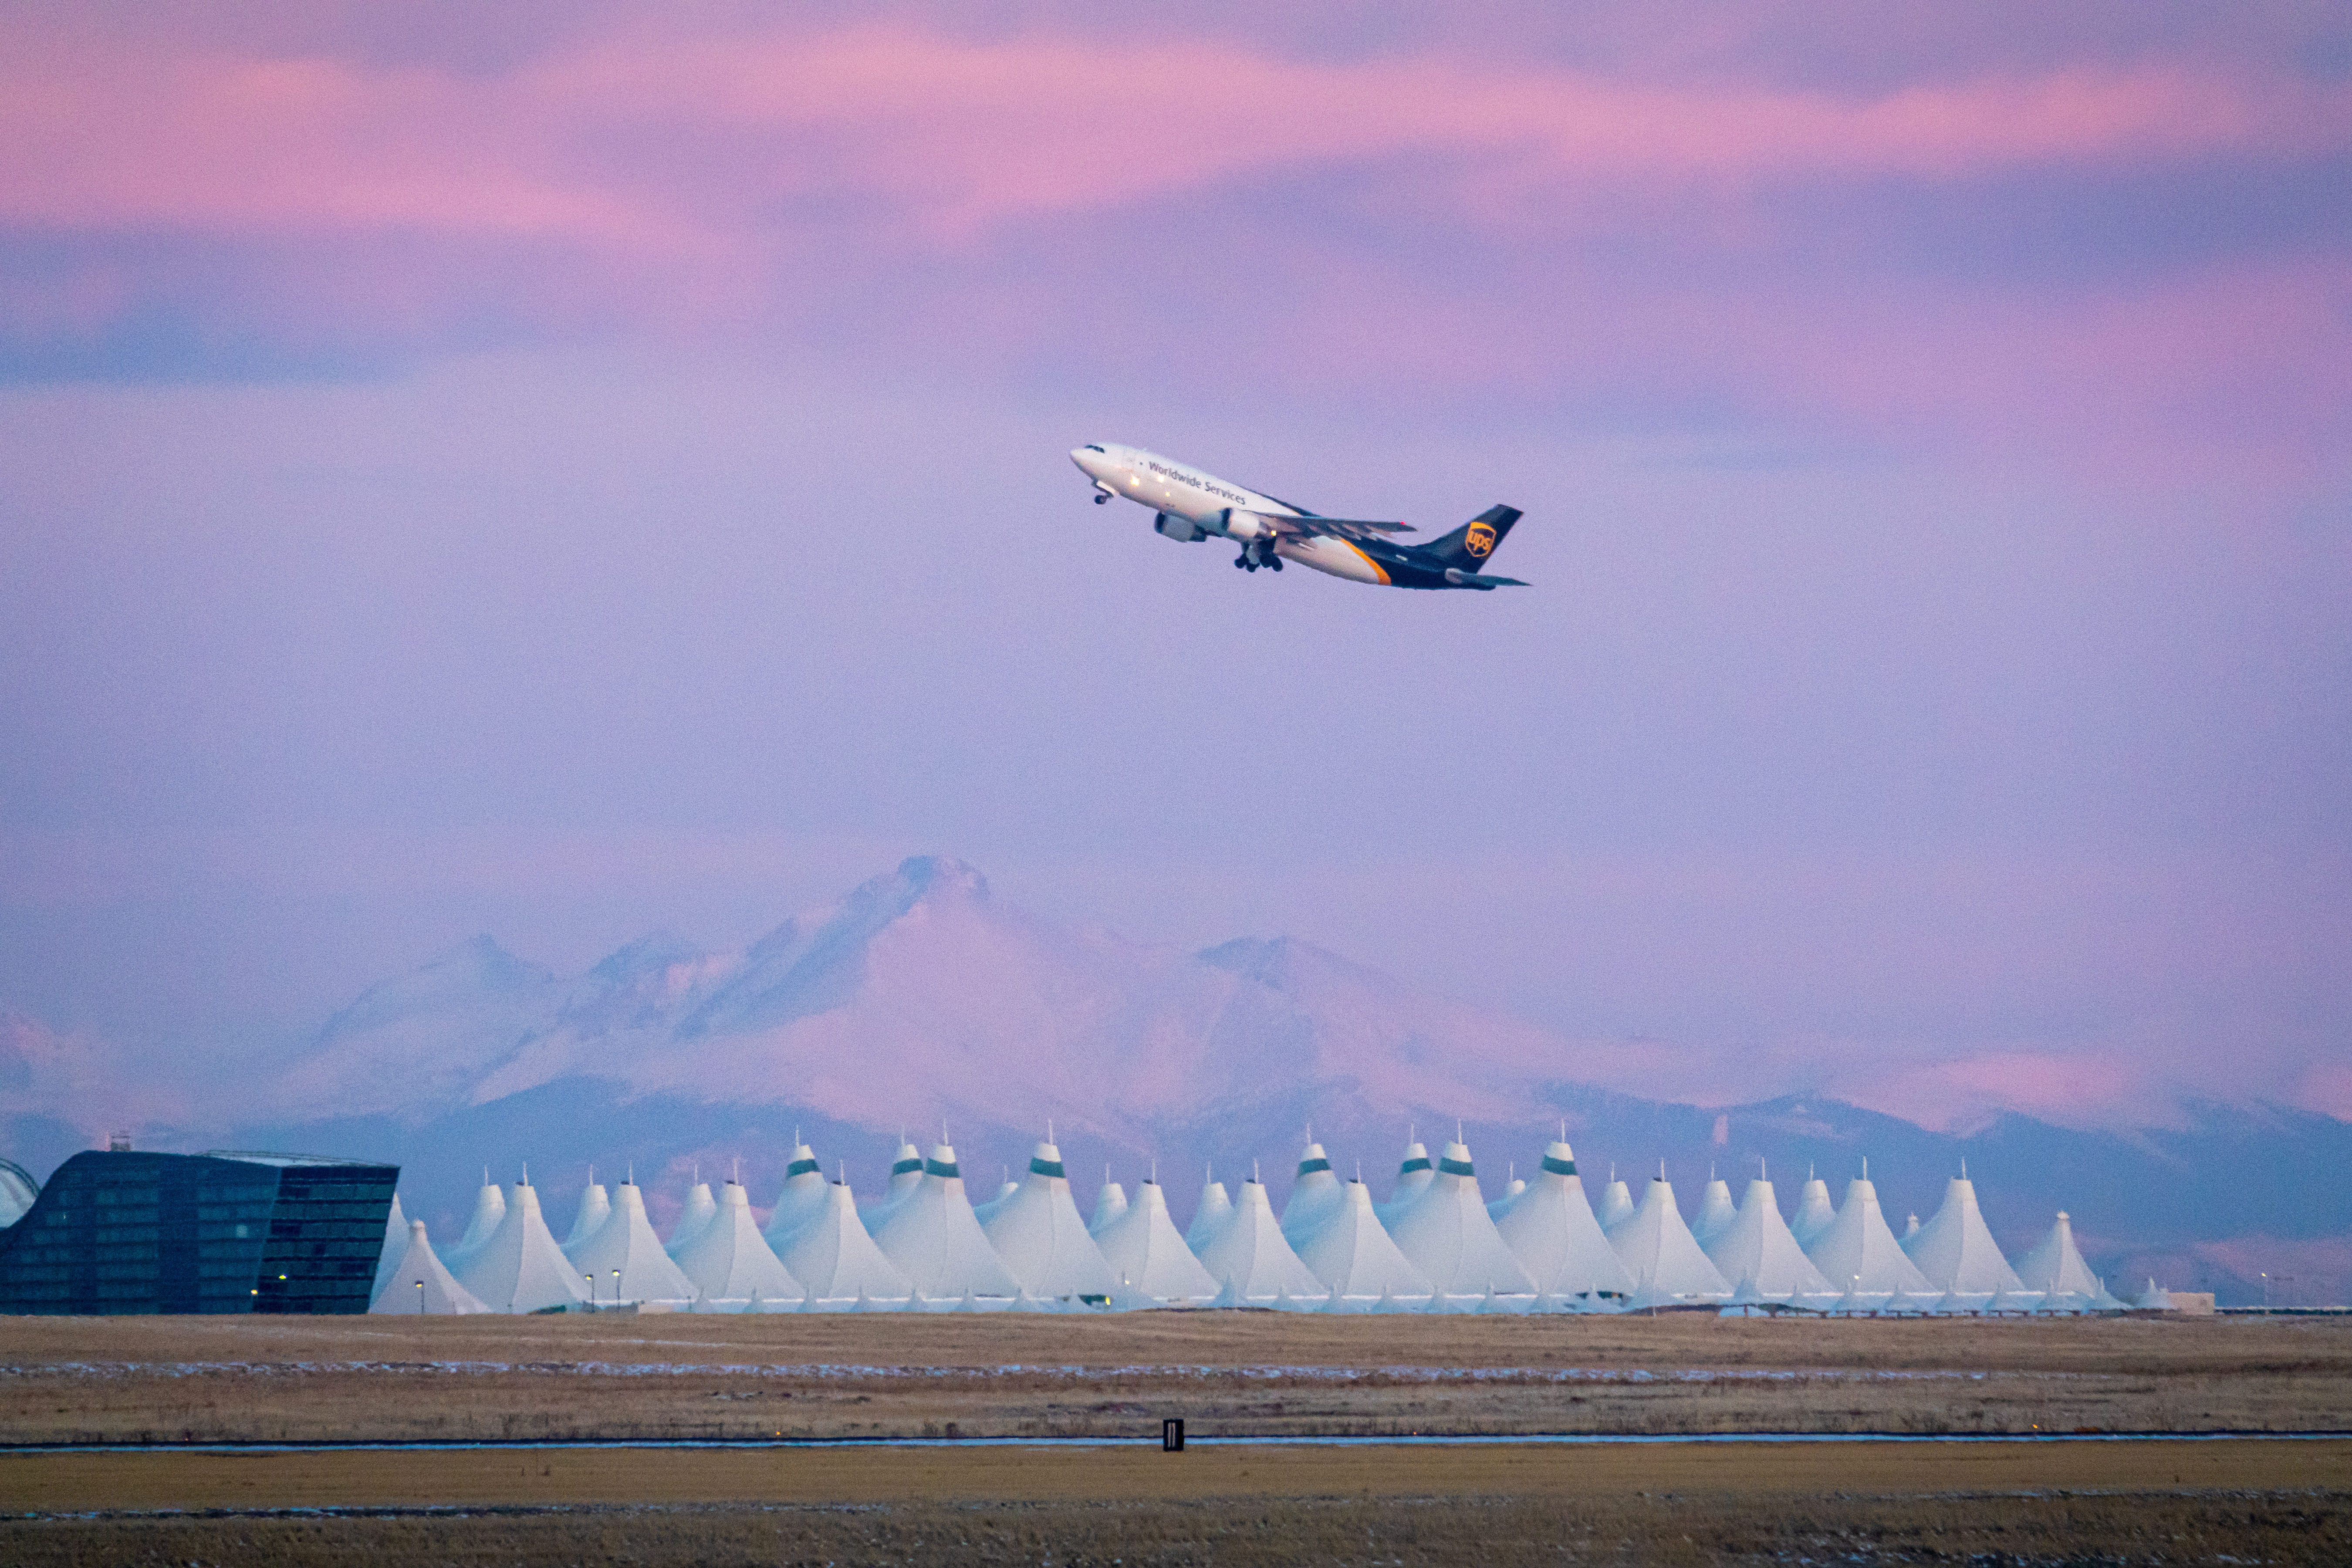 An aircraft taking off from Denver International Airport.